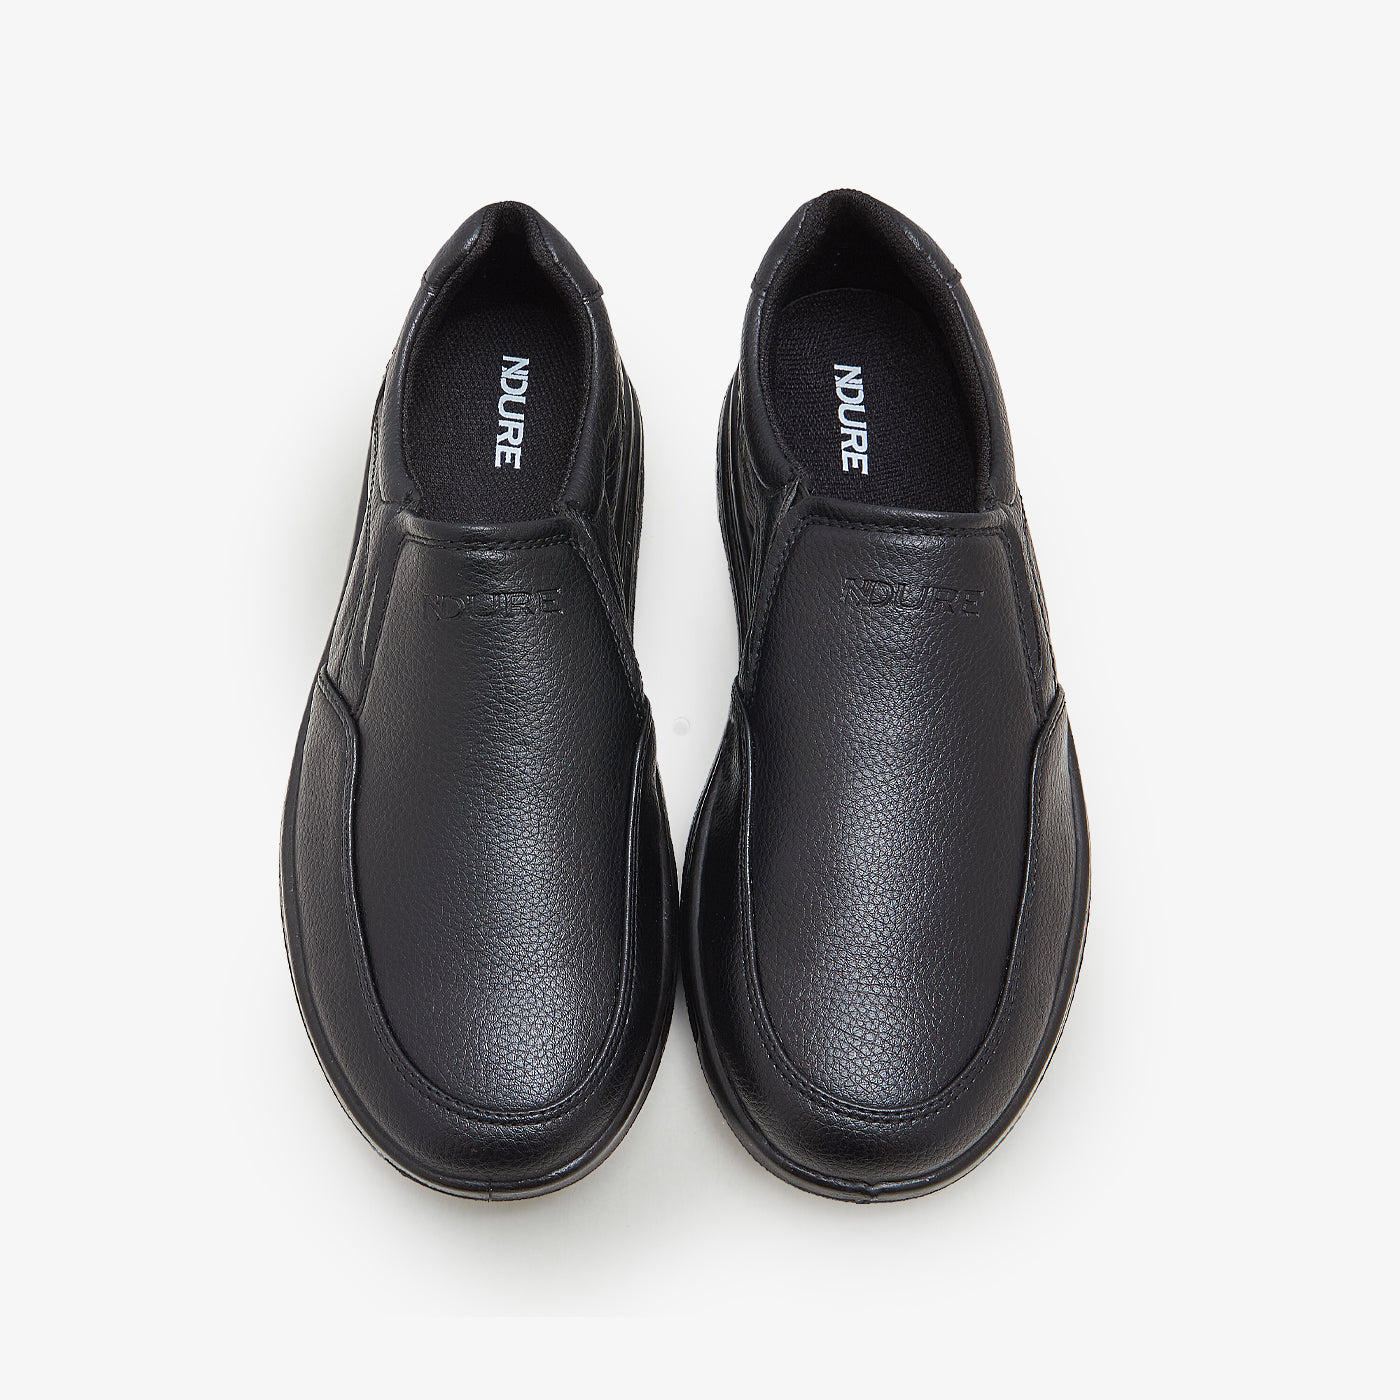 Buy Men Loafers & Slip-Ons - Men's Casual Boots M-OB-STR-0003 – Ndure.com